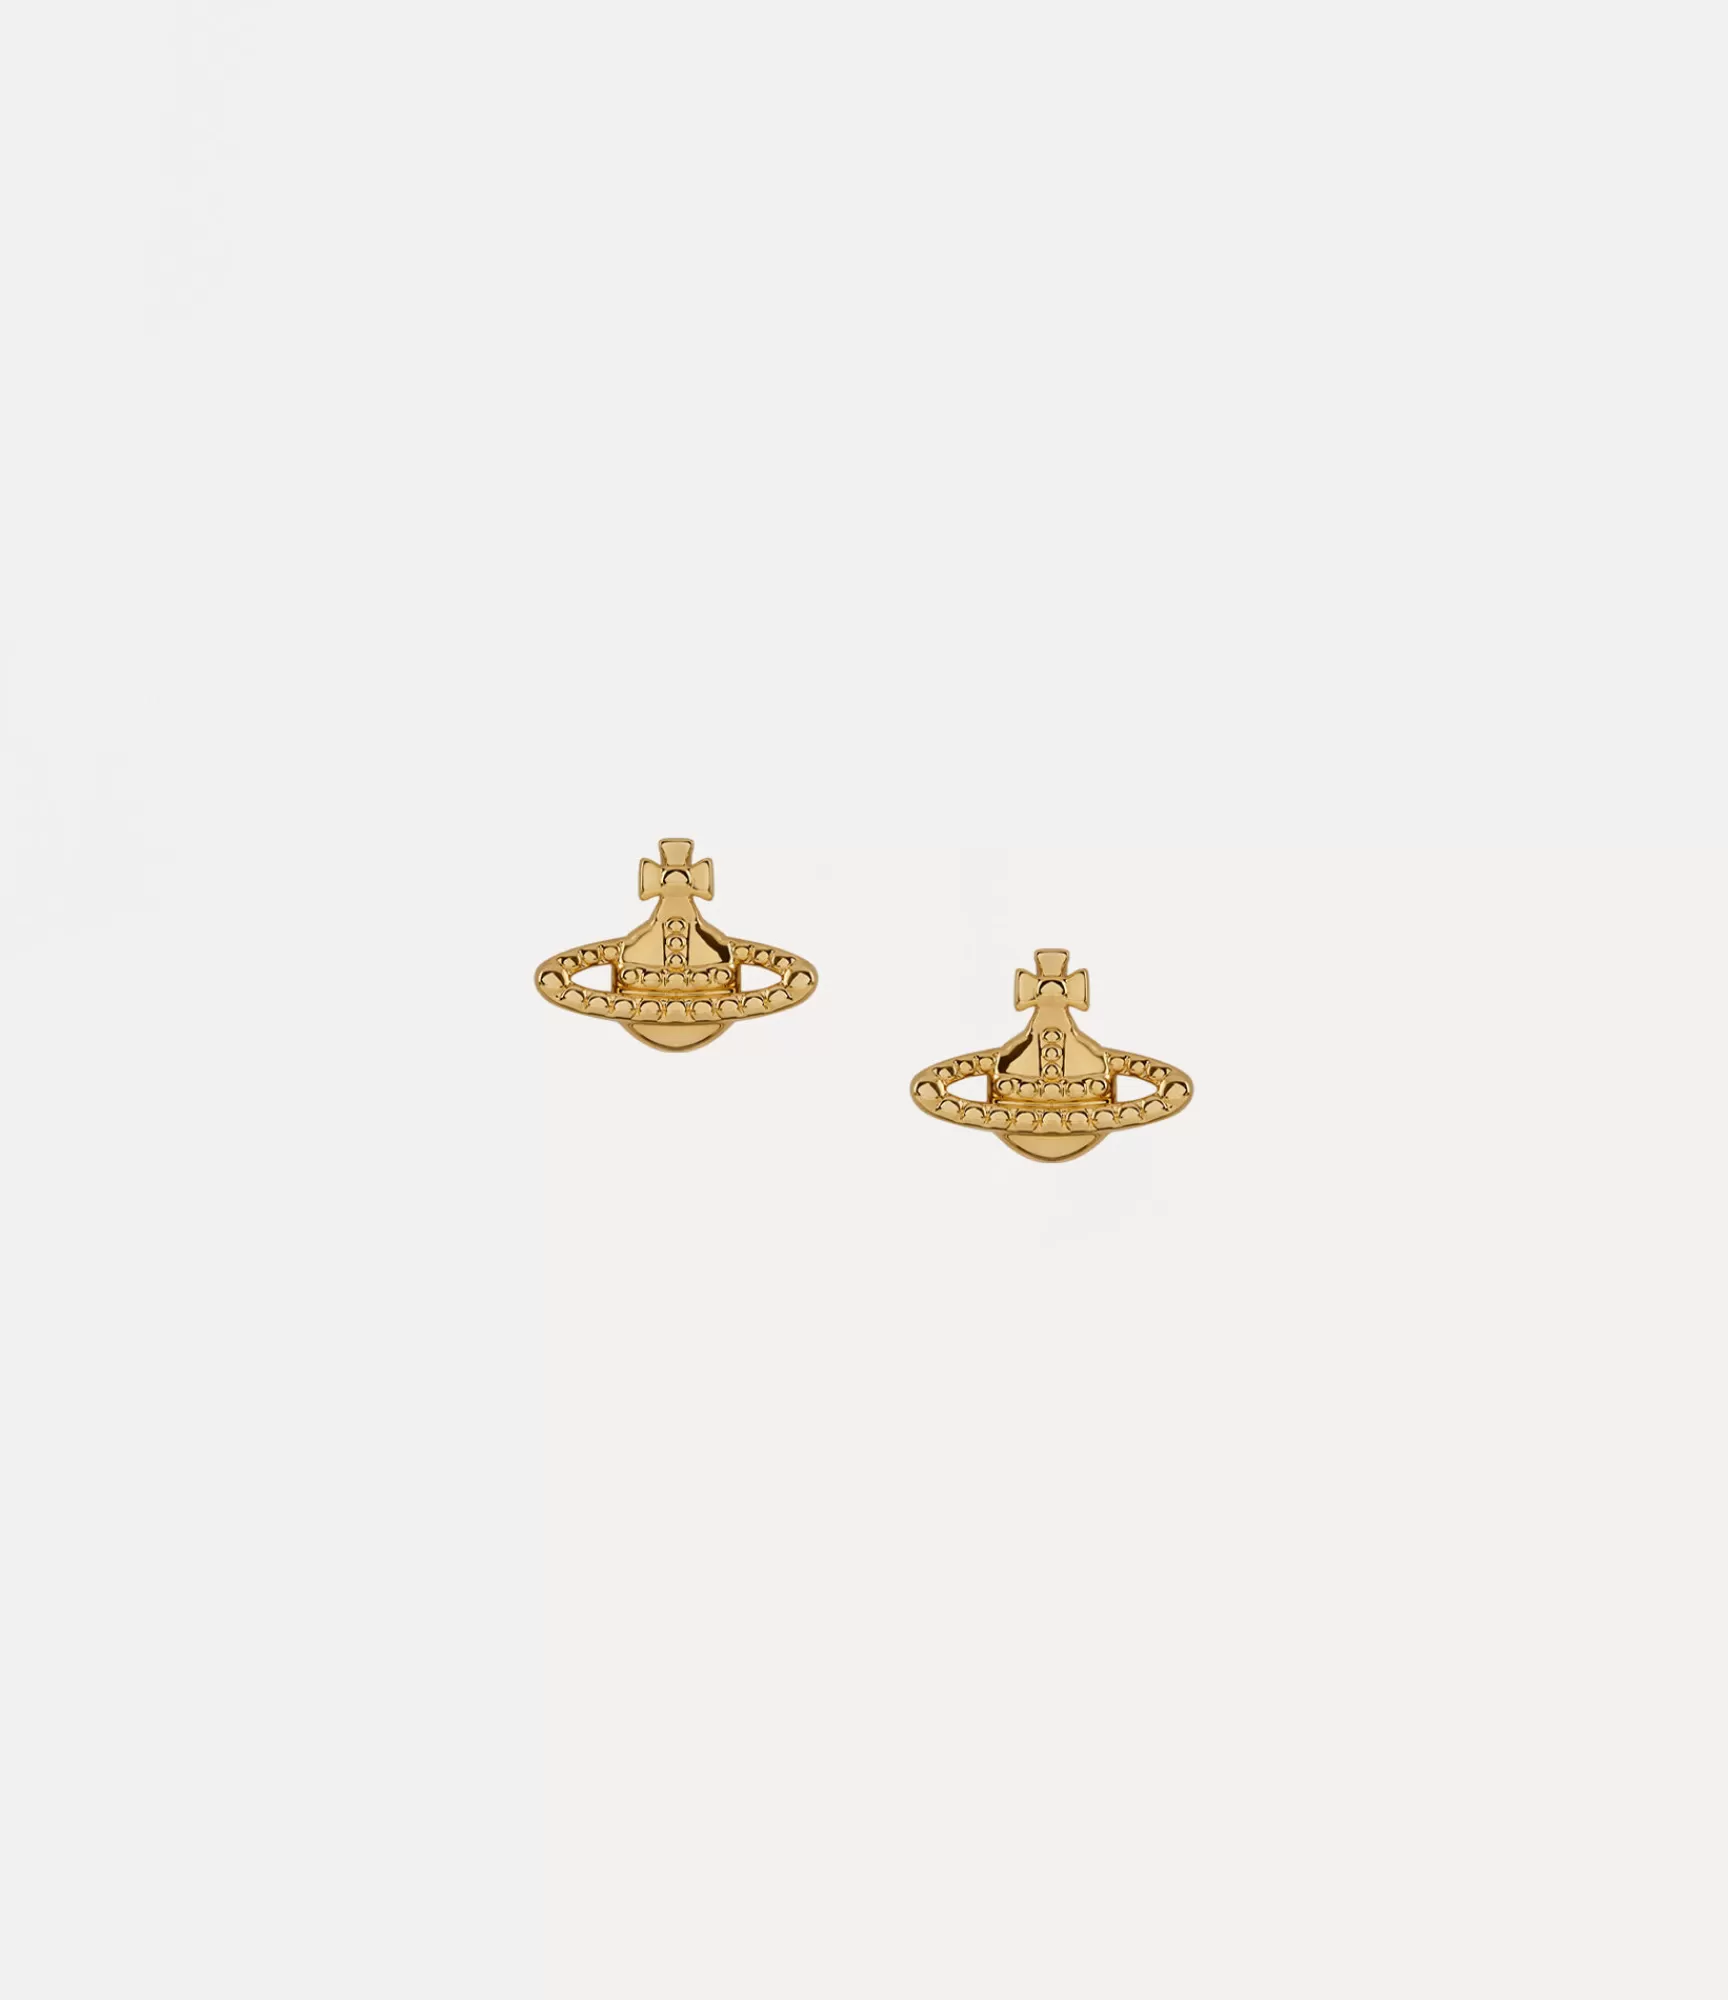 Vivienne Westwood Earrings*Farah earrings Gold